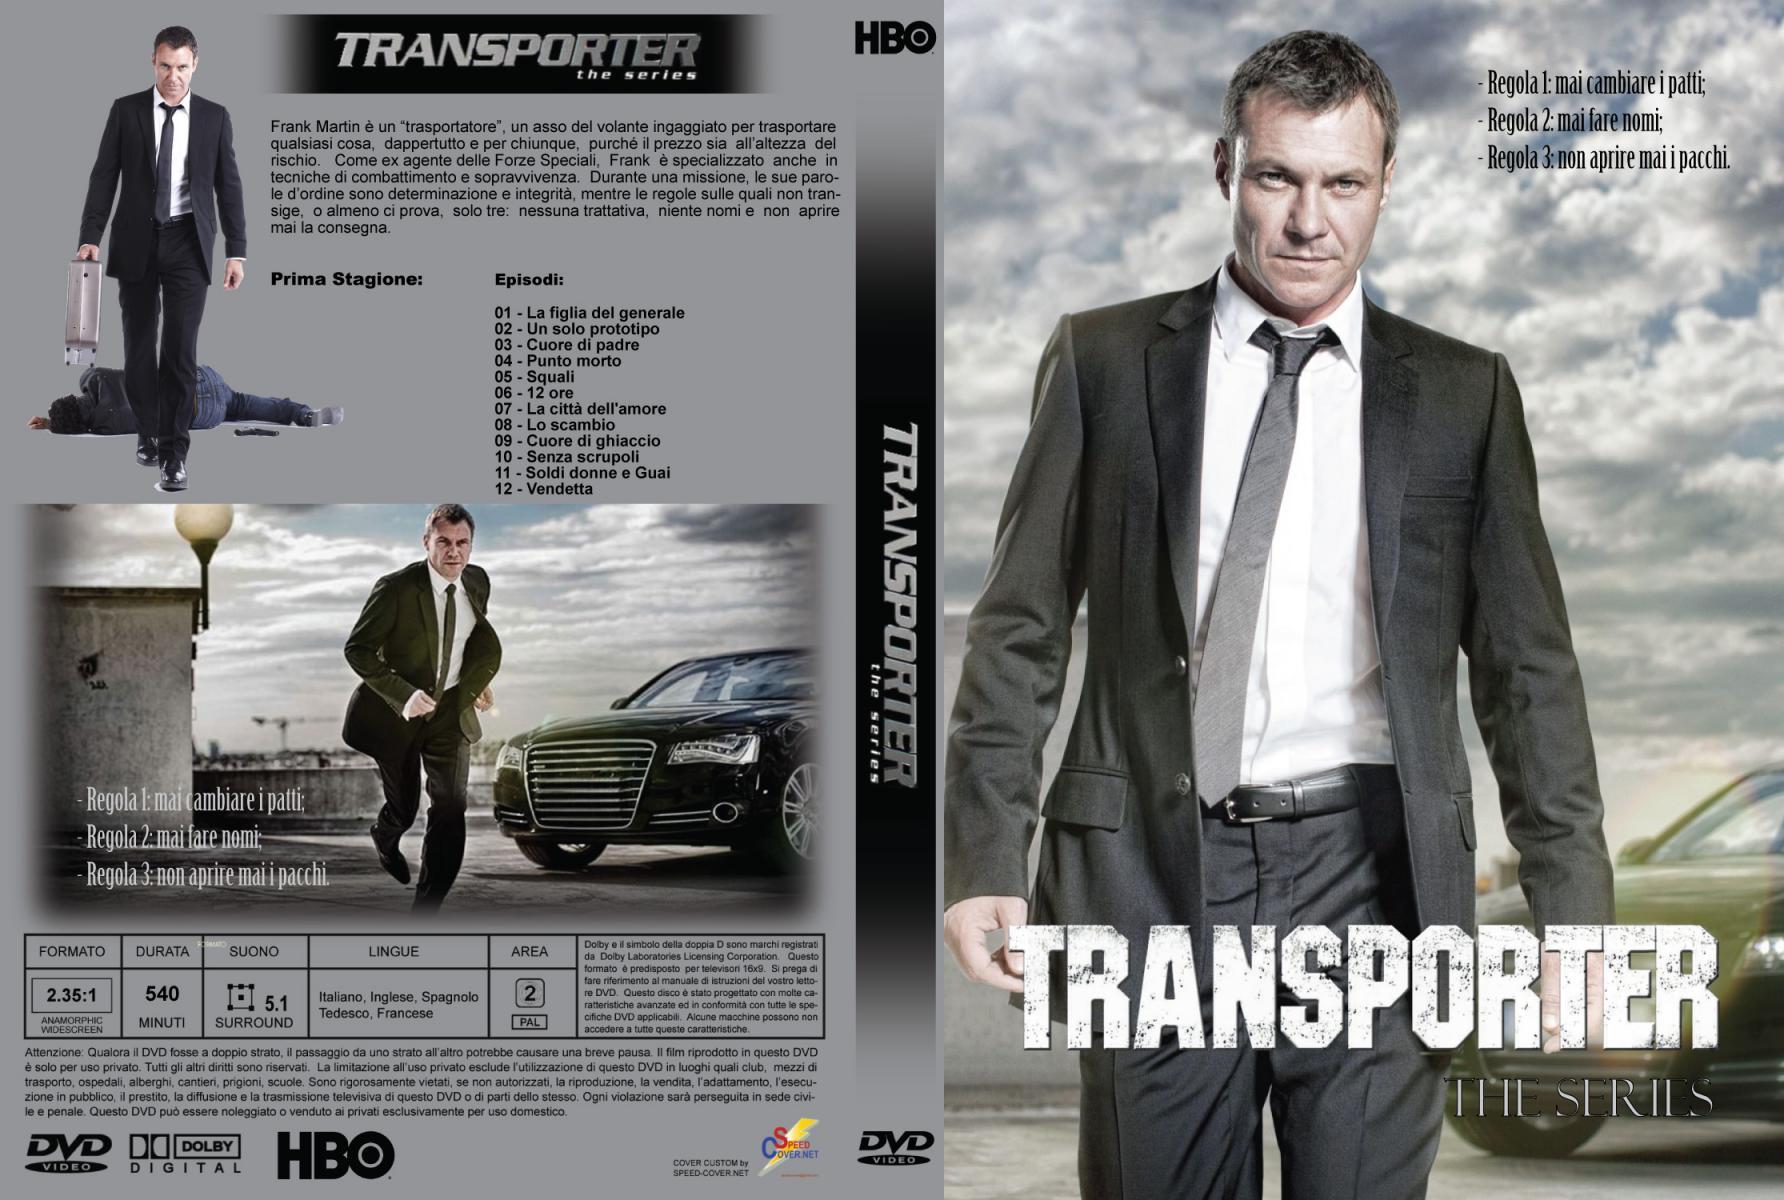 op gang brengen vuist enkel Image gallery for Transporter (TV Series) - FilmAffinity